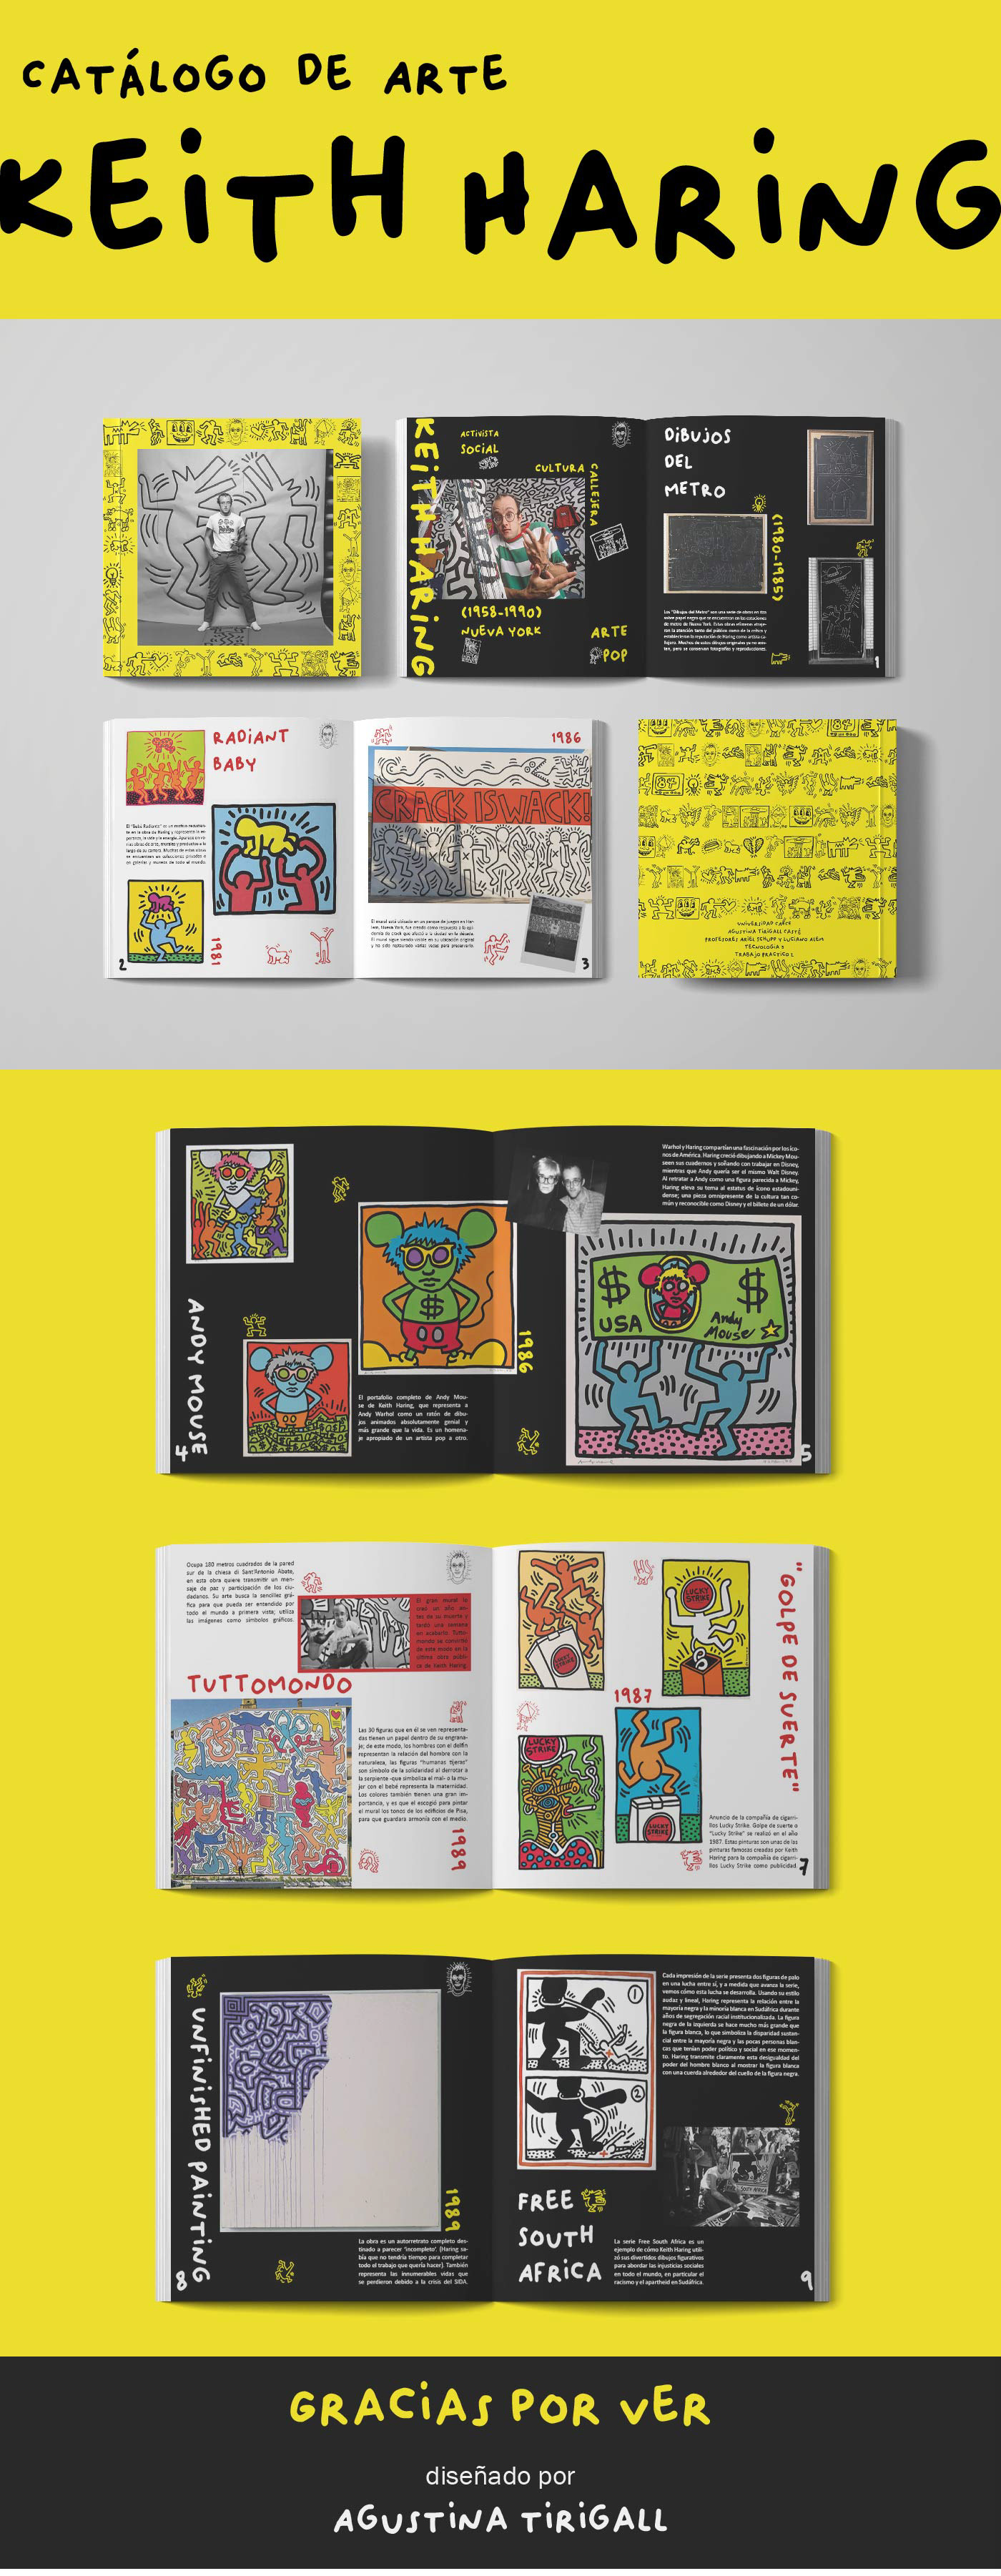 InDesign editorial art arte Keith Haring catalogo diseño gráfico libro